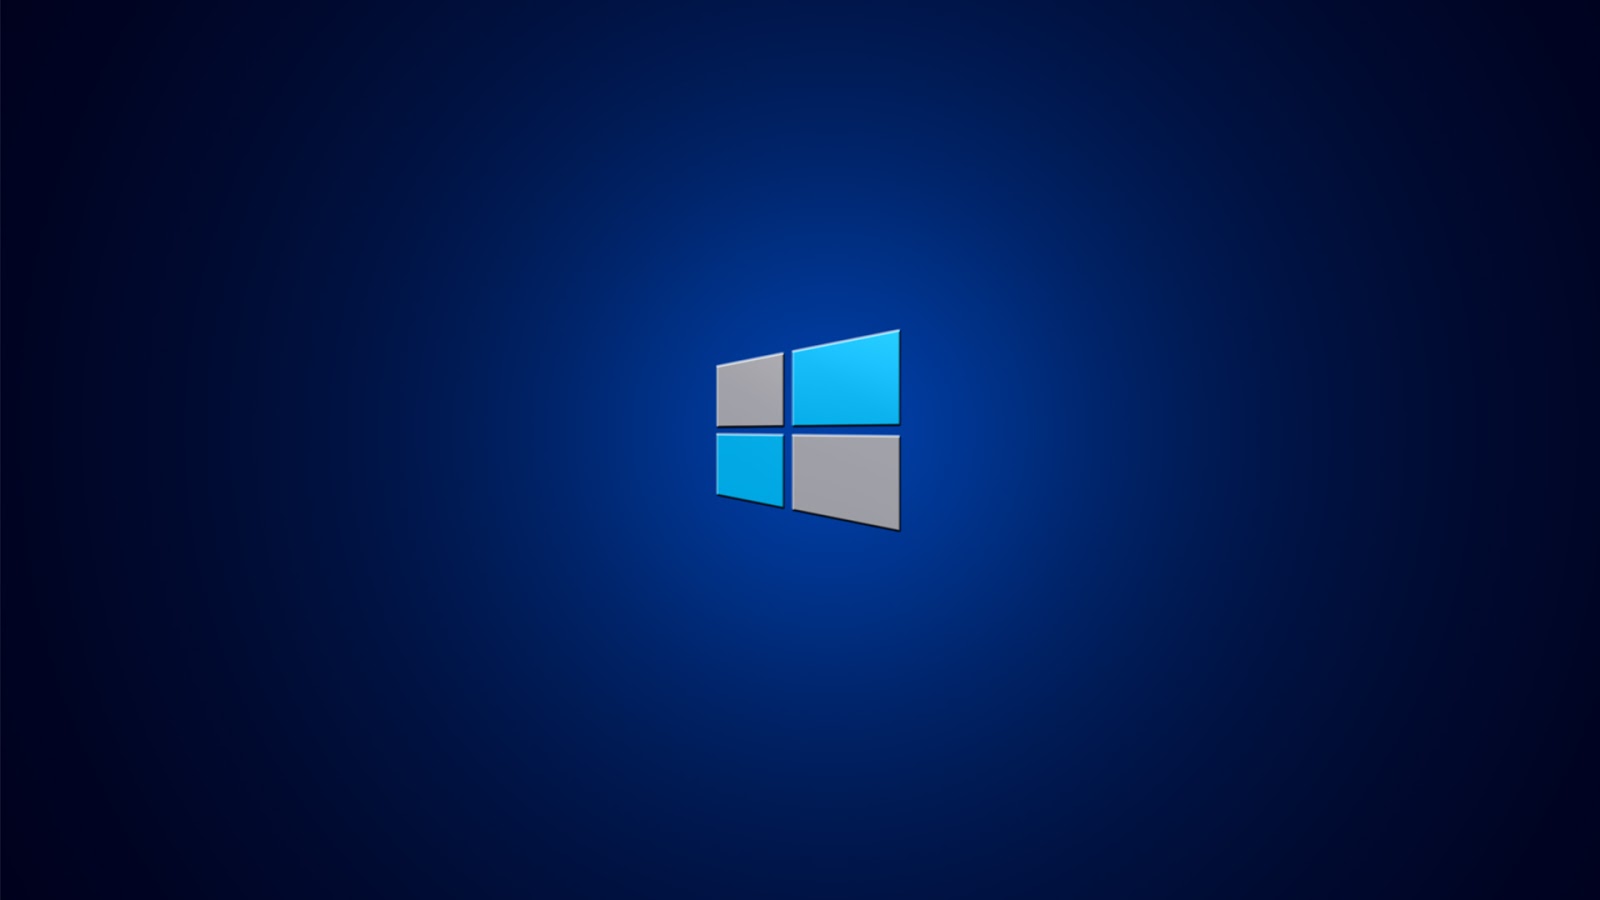 Windows 8 Full HD wallpapers 1080p